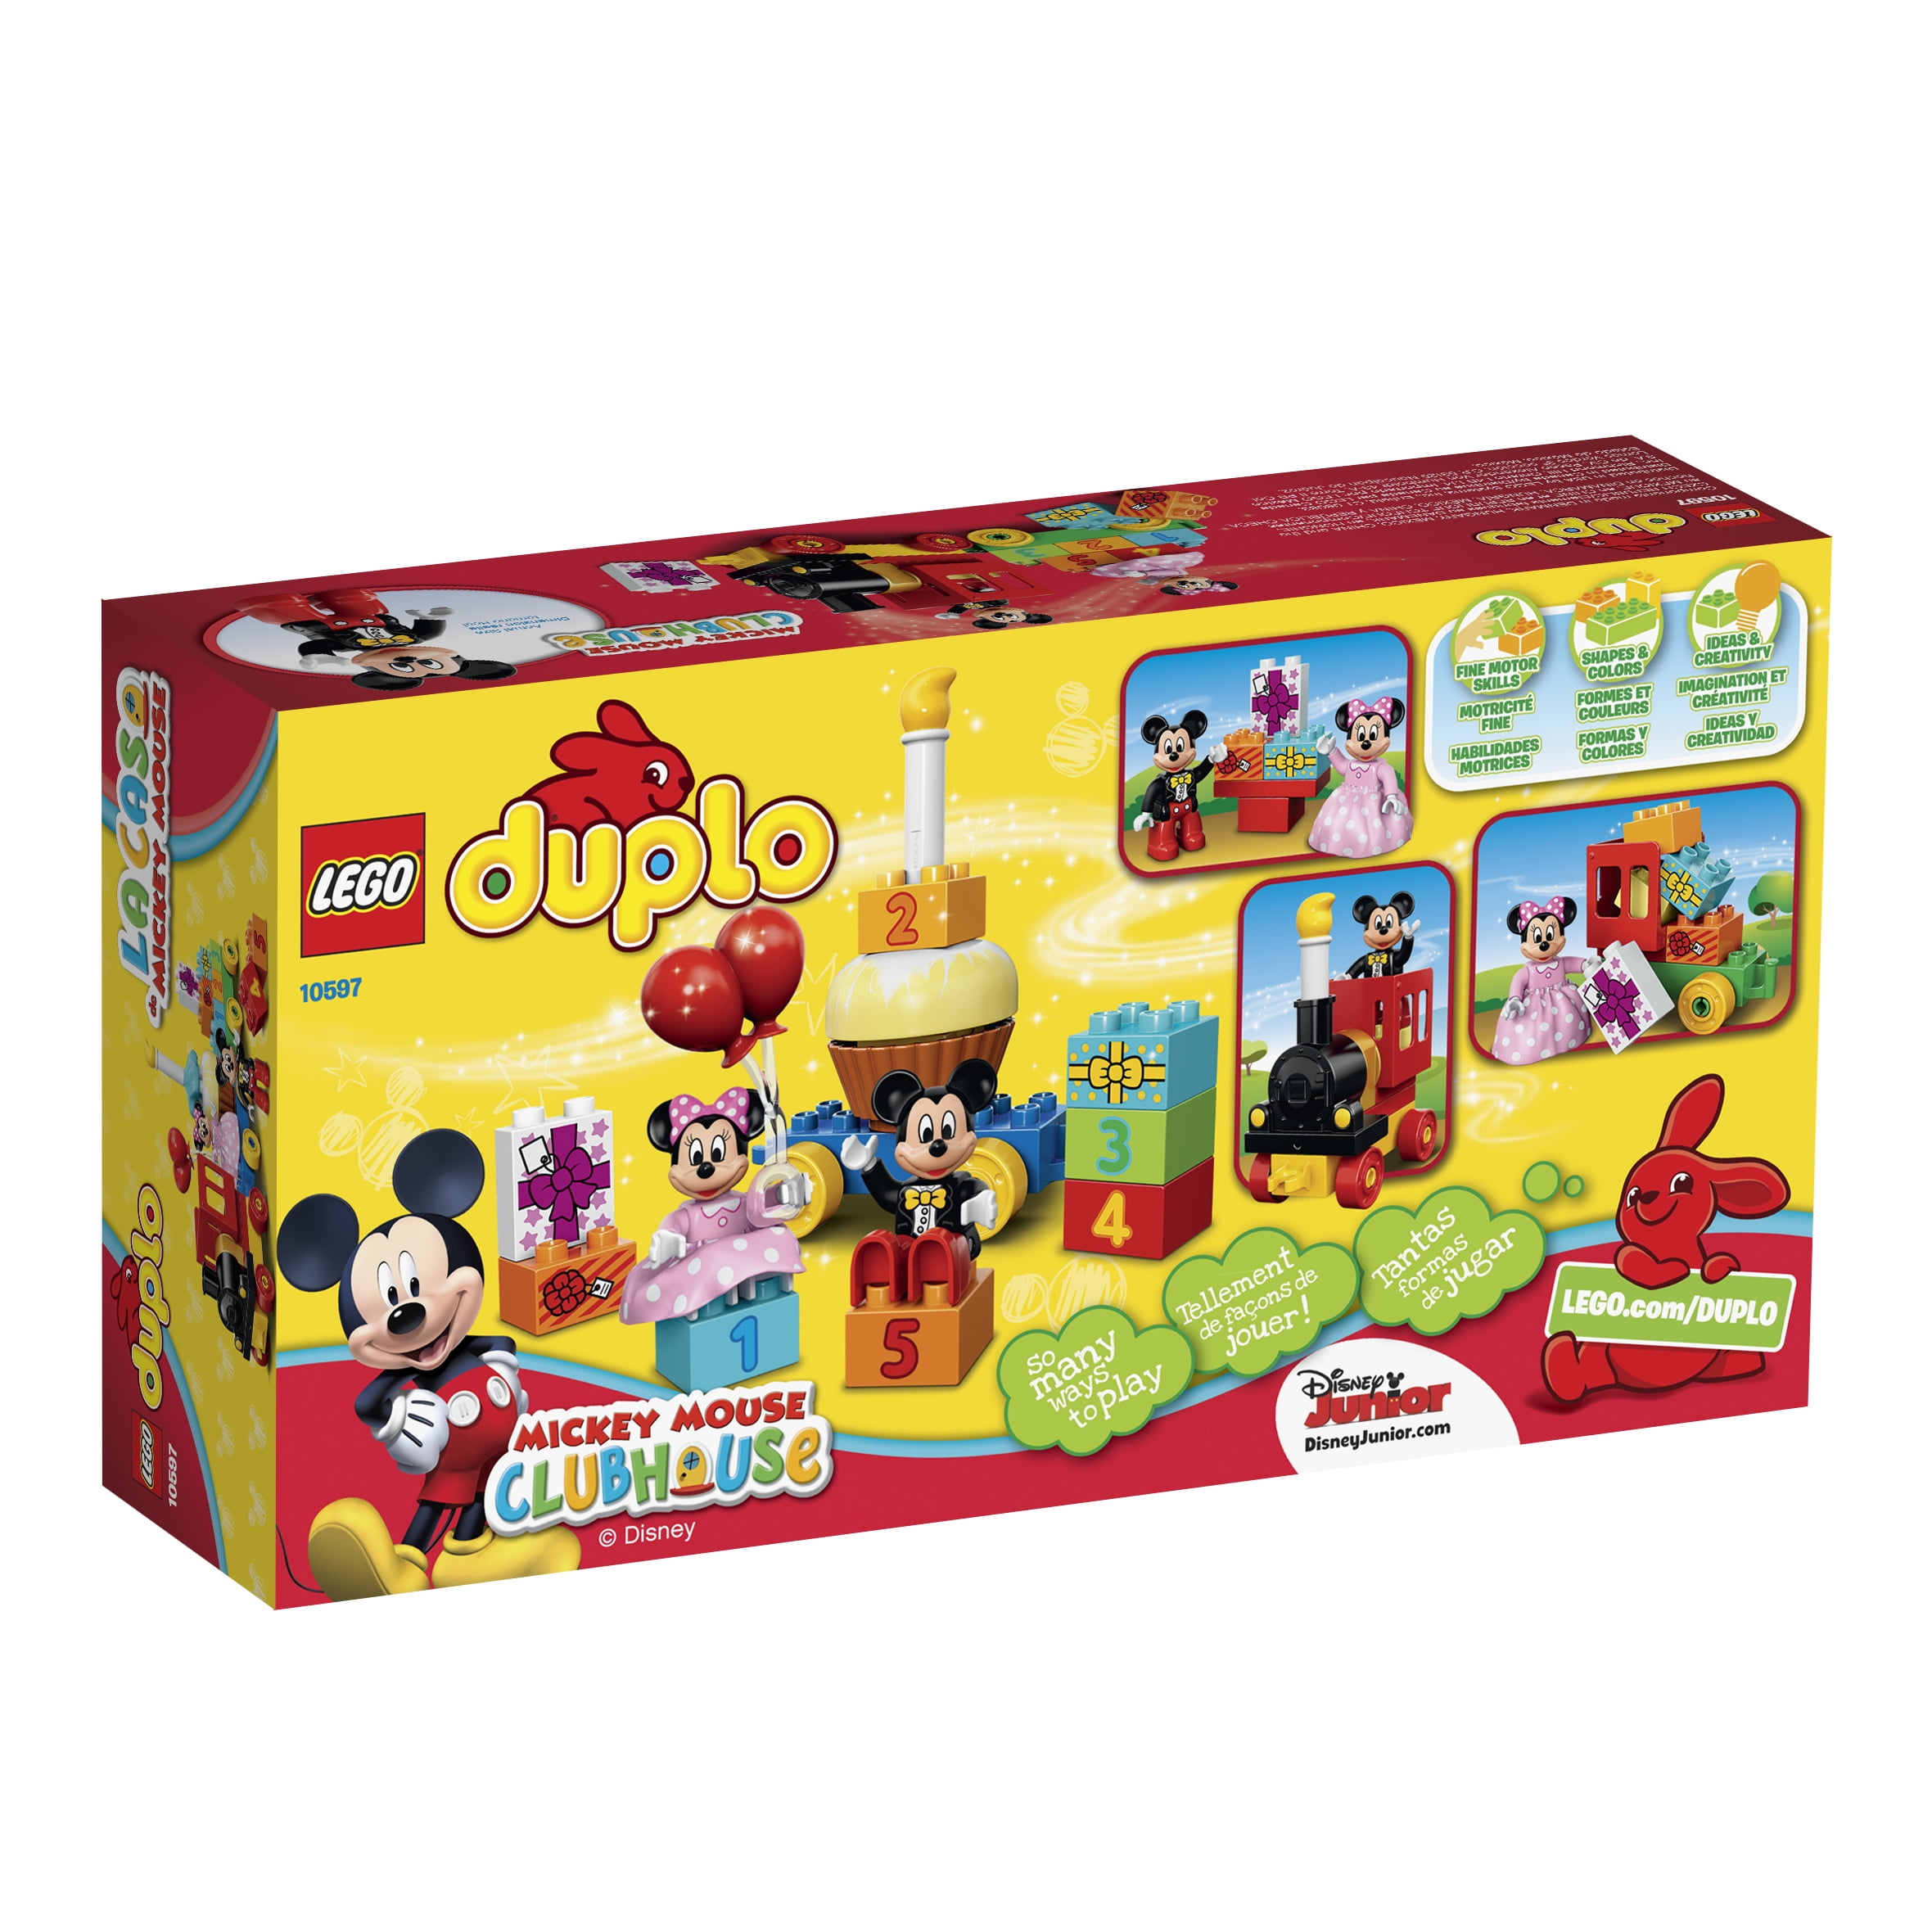 Verschuiving het einde Oven LEGO DUPLO Disney Mickey & Minnie Birthday Parade 10597 - Walmart.com